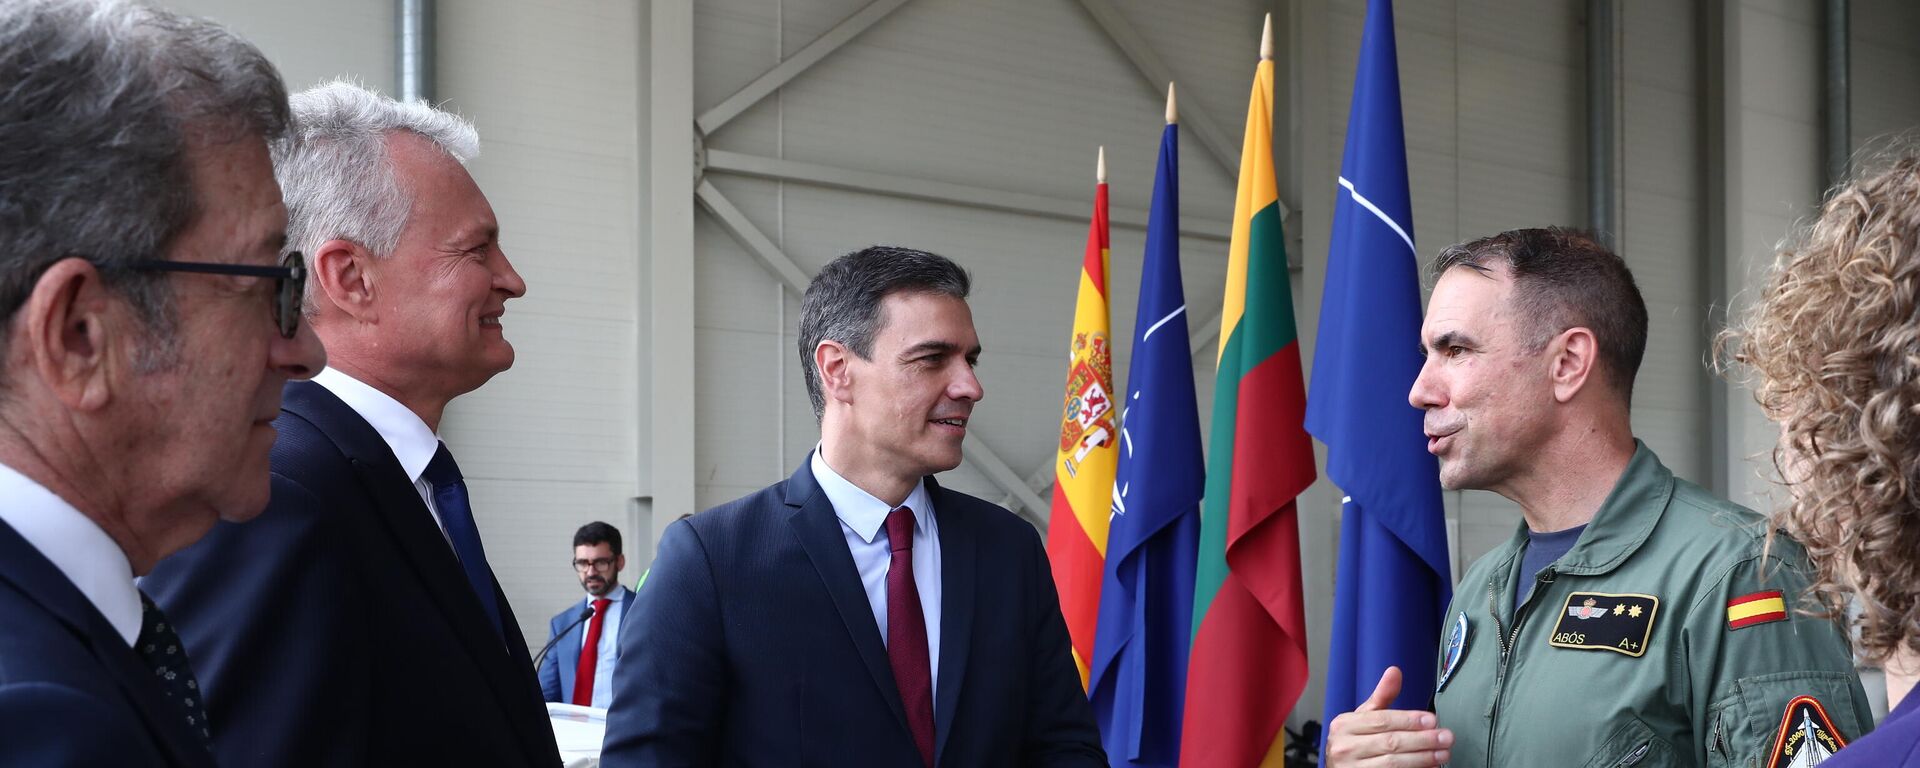 El presidente del Gobierno de España, Pedro Sánchez, durante una rueda de prensa en la base de Siauliai junto al presidente de Lituania, Gitanas Nauseda - Sputnik Mundo, 1920, 08.07.2021